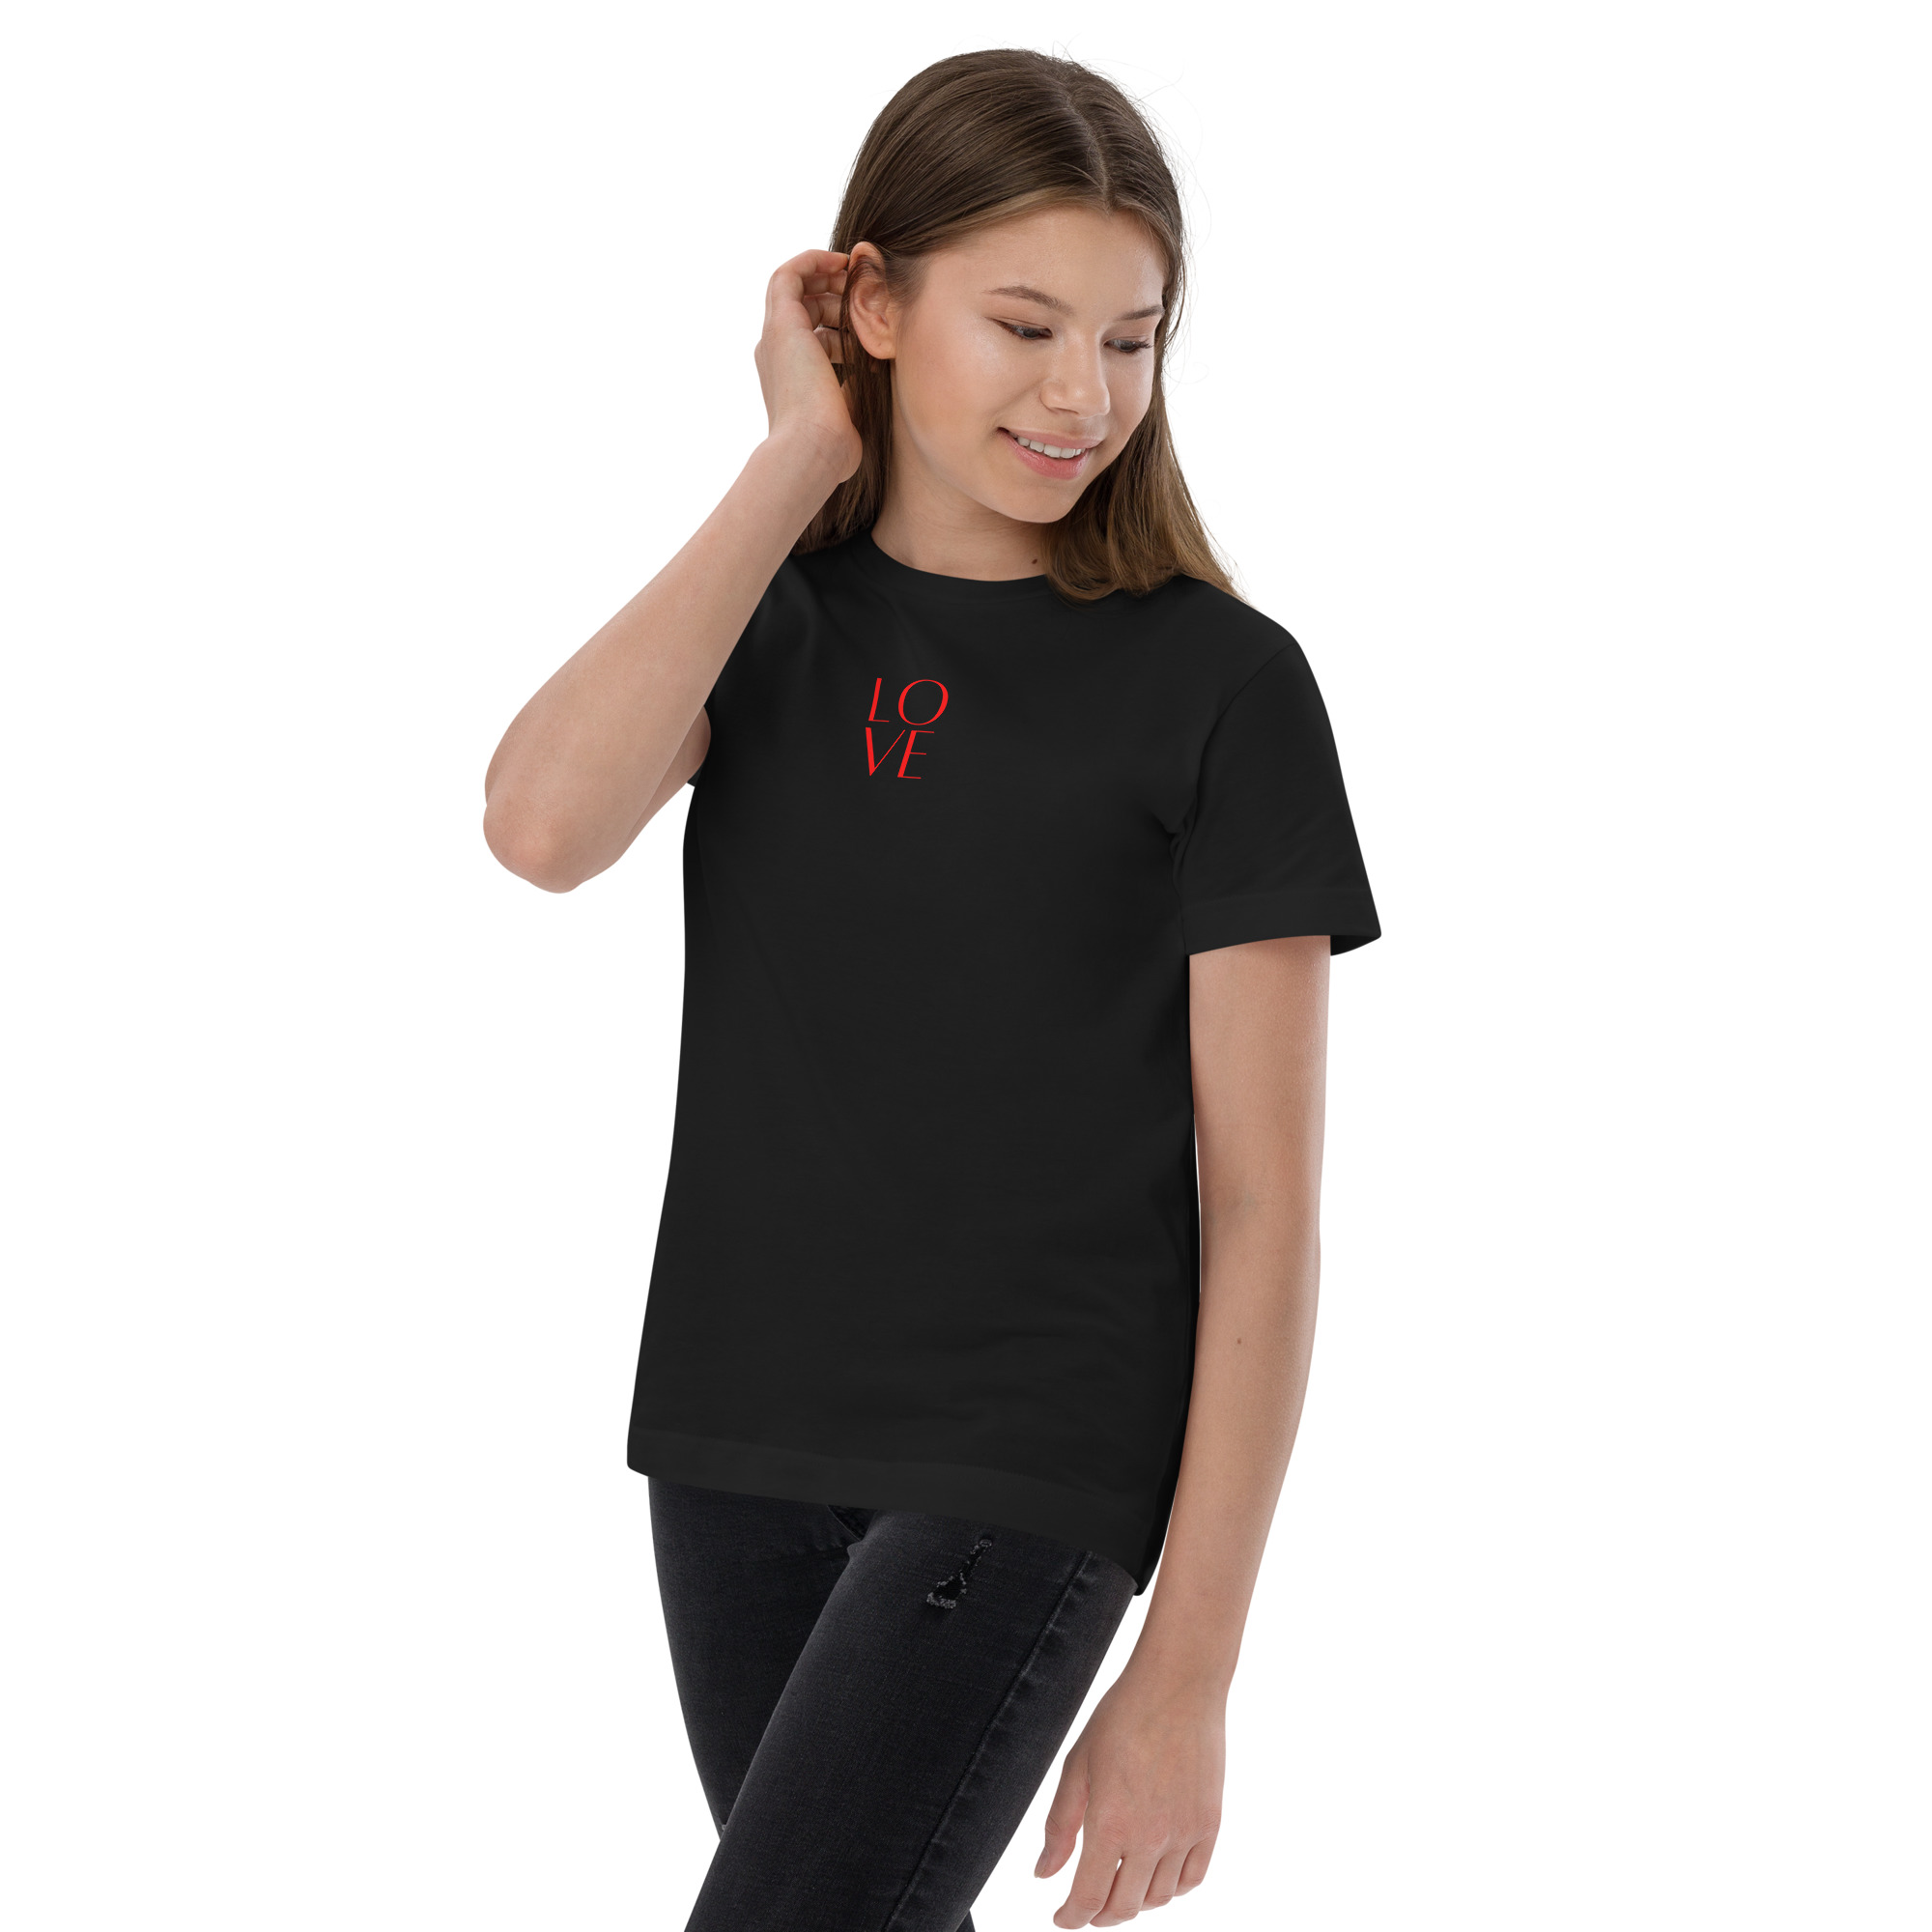 youth-jersey-t-shirt-black-left-front-6384cb2a1d509.jpg